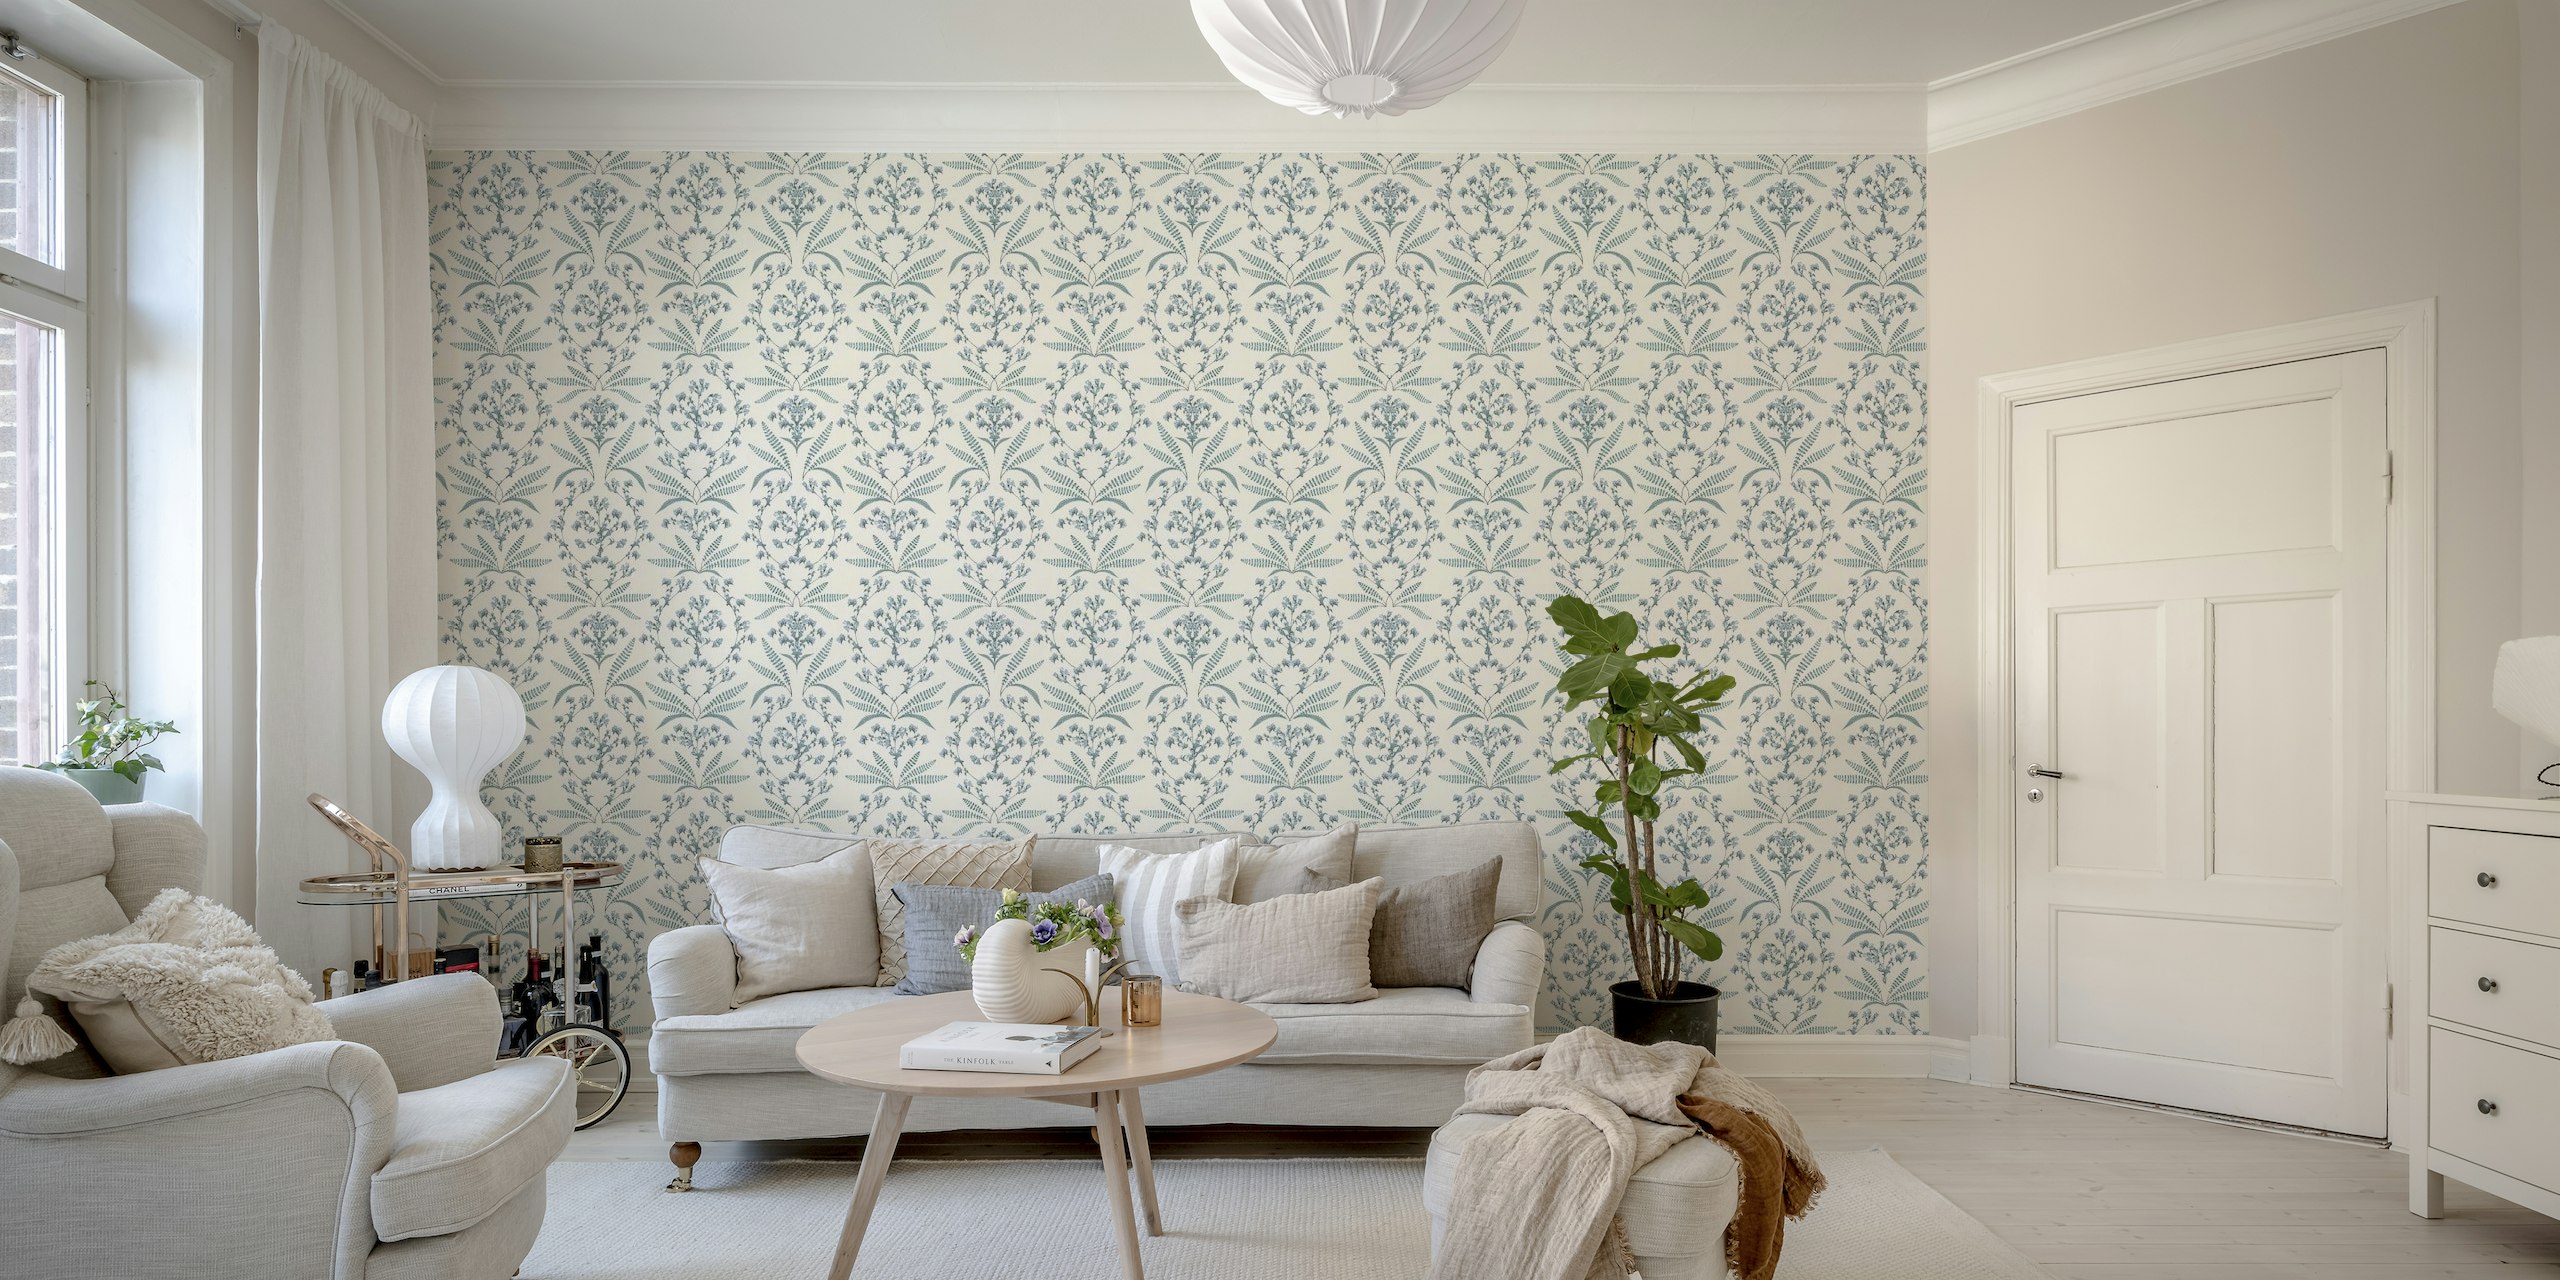 Rustic cottage floral damask cyan blue wallpaper